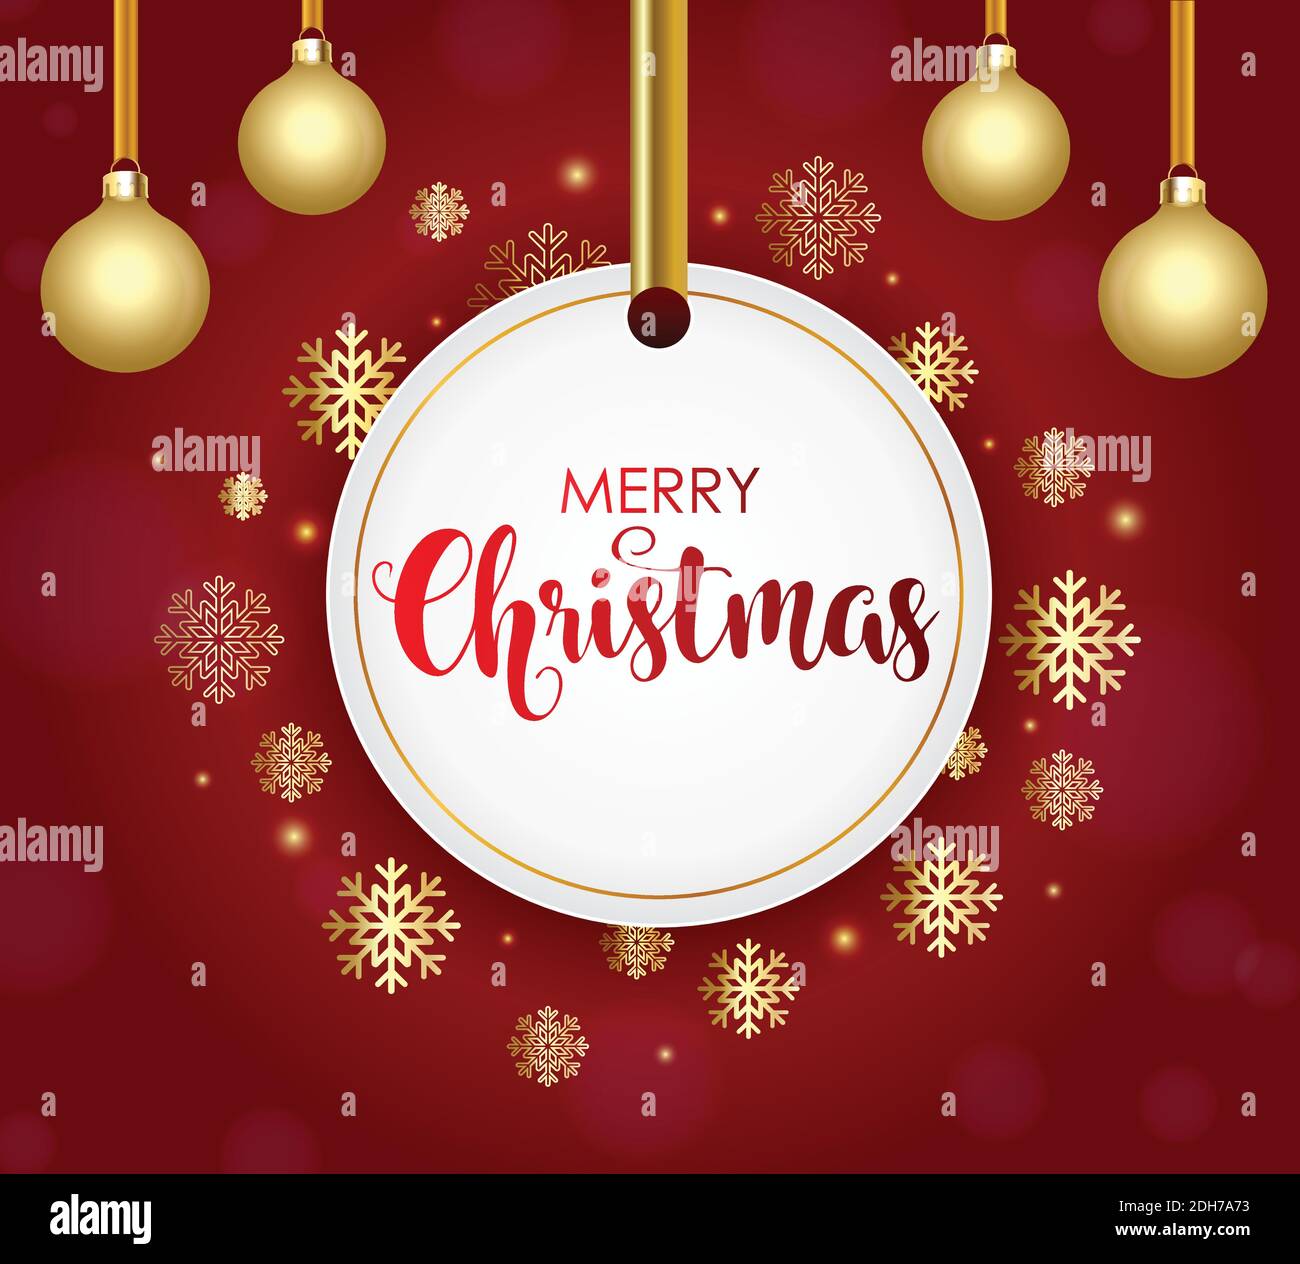 Christmas banner vector illustration. Red background. Merry Christmas deign. Christmas banner. Christmas background with snow flakes. Stock Vector